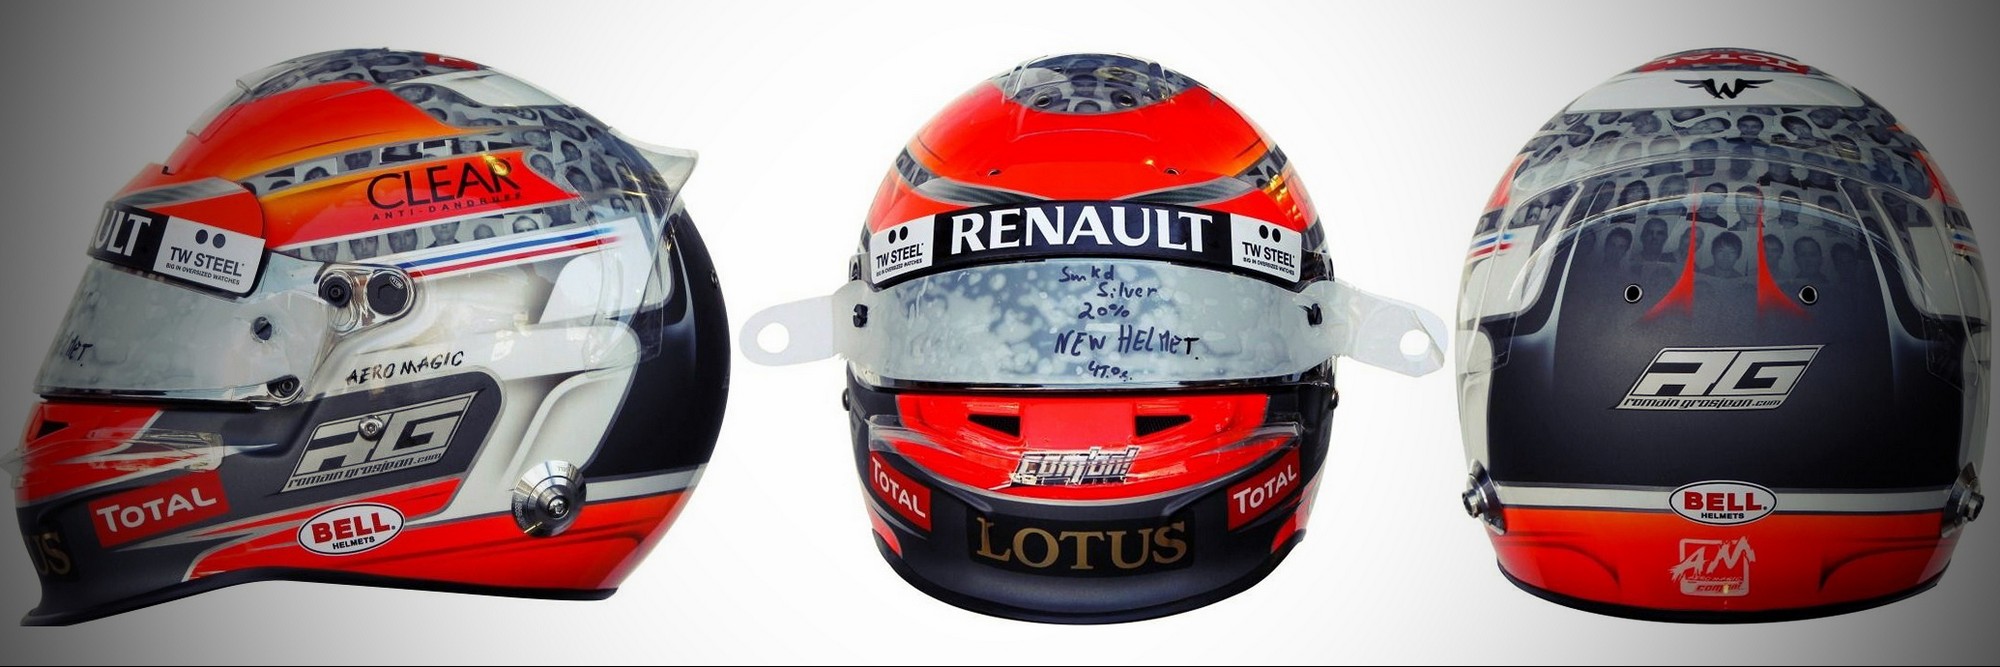 Шлем Романа Грожана на Гран-При Бразилии 2012 | 2012 Brazilian Grand Prix helmet of Romain Grosjean